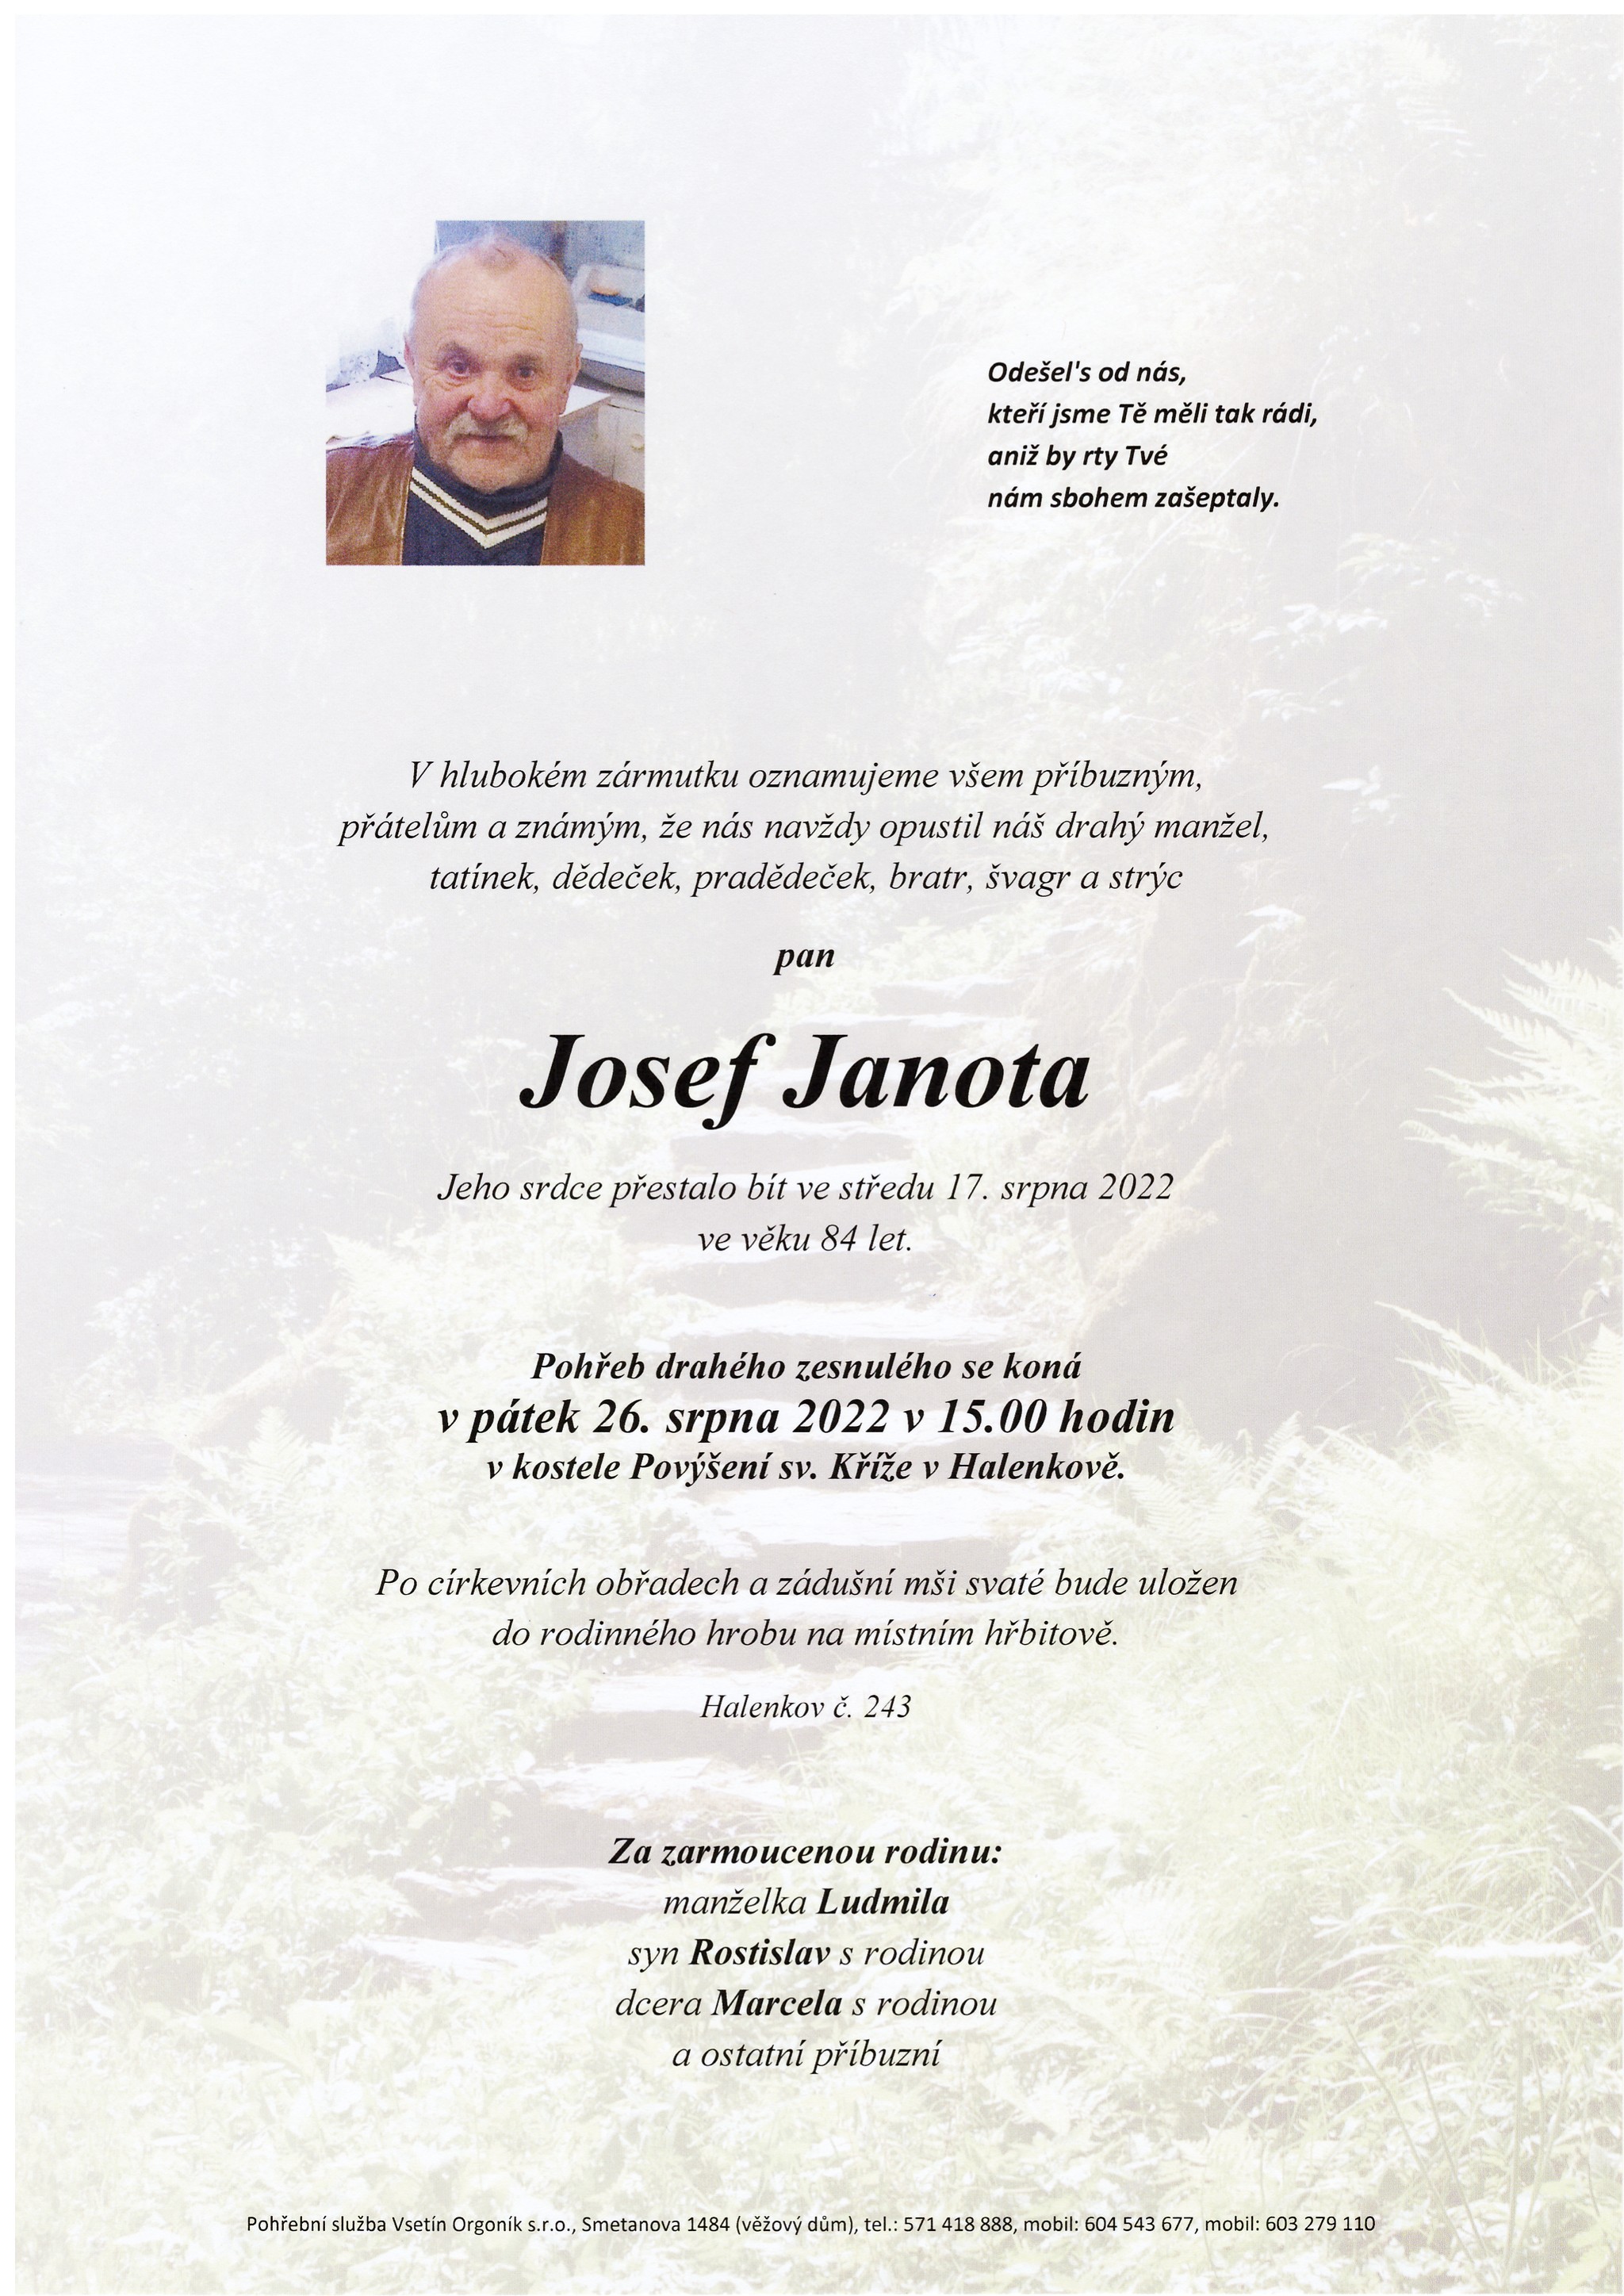 Josef Janota